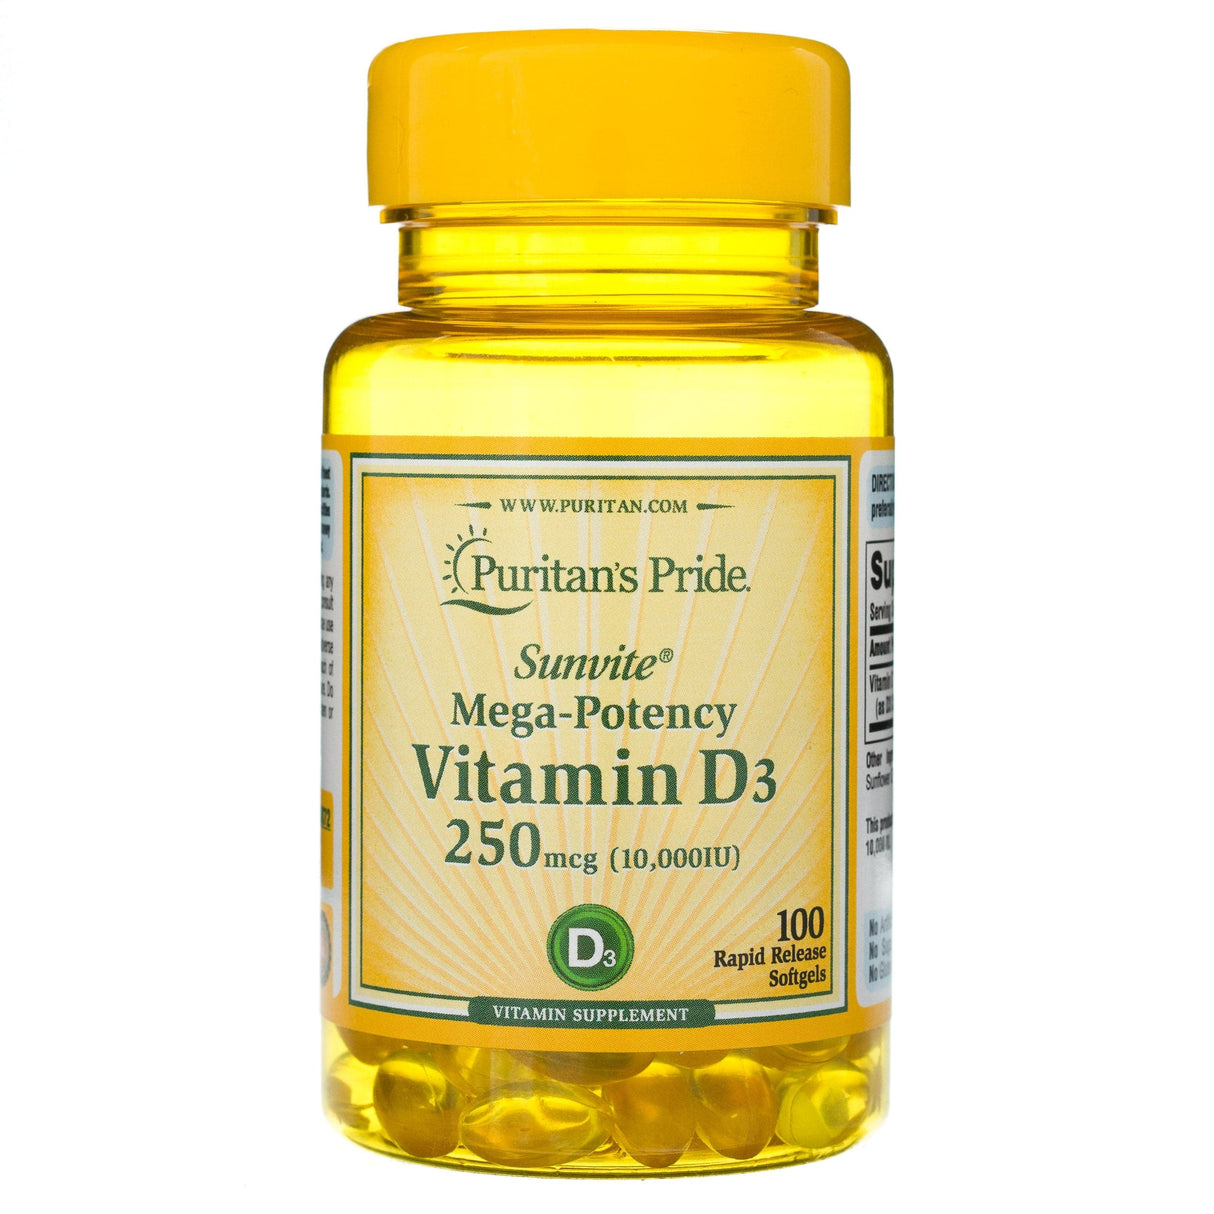 Puritan's Pride Vitamin D3 250 mcg (10000 IU) - 100 Softgels